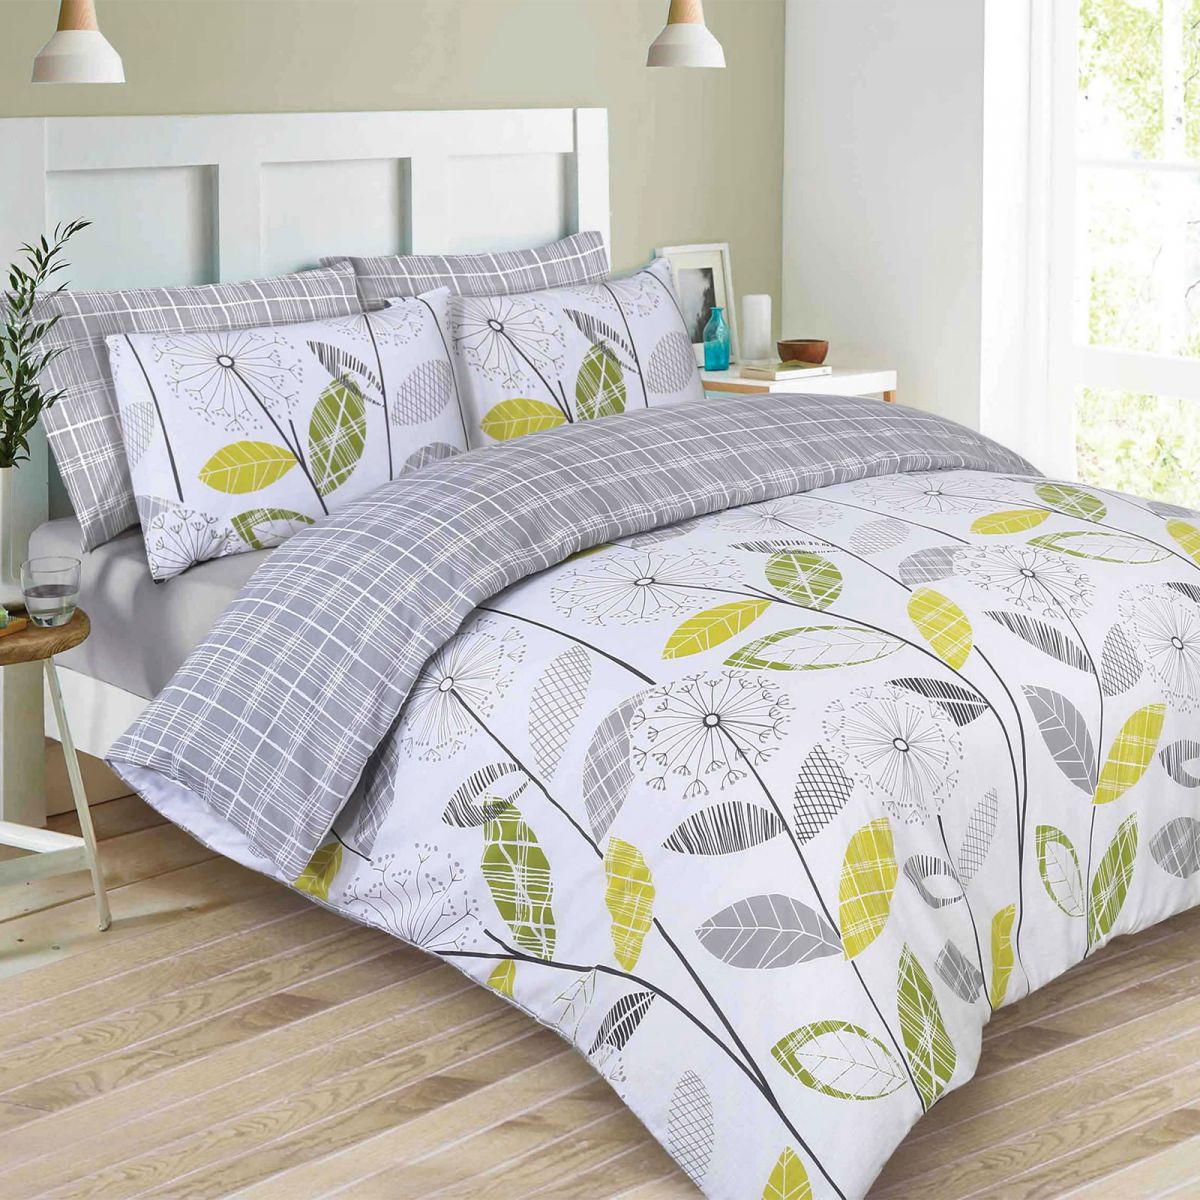 Dreamscene Allium Floral Tartan Check Bedding Single Duvet Cover Set - Grey/White